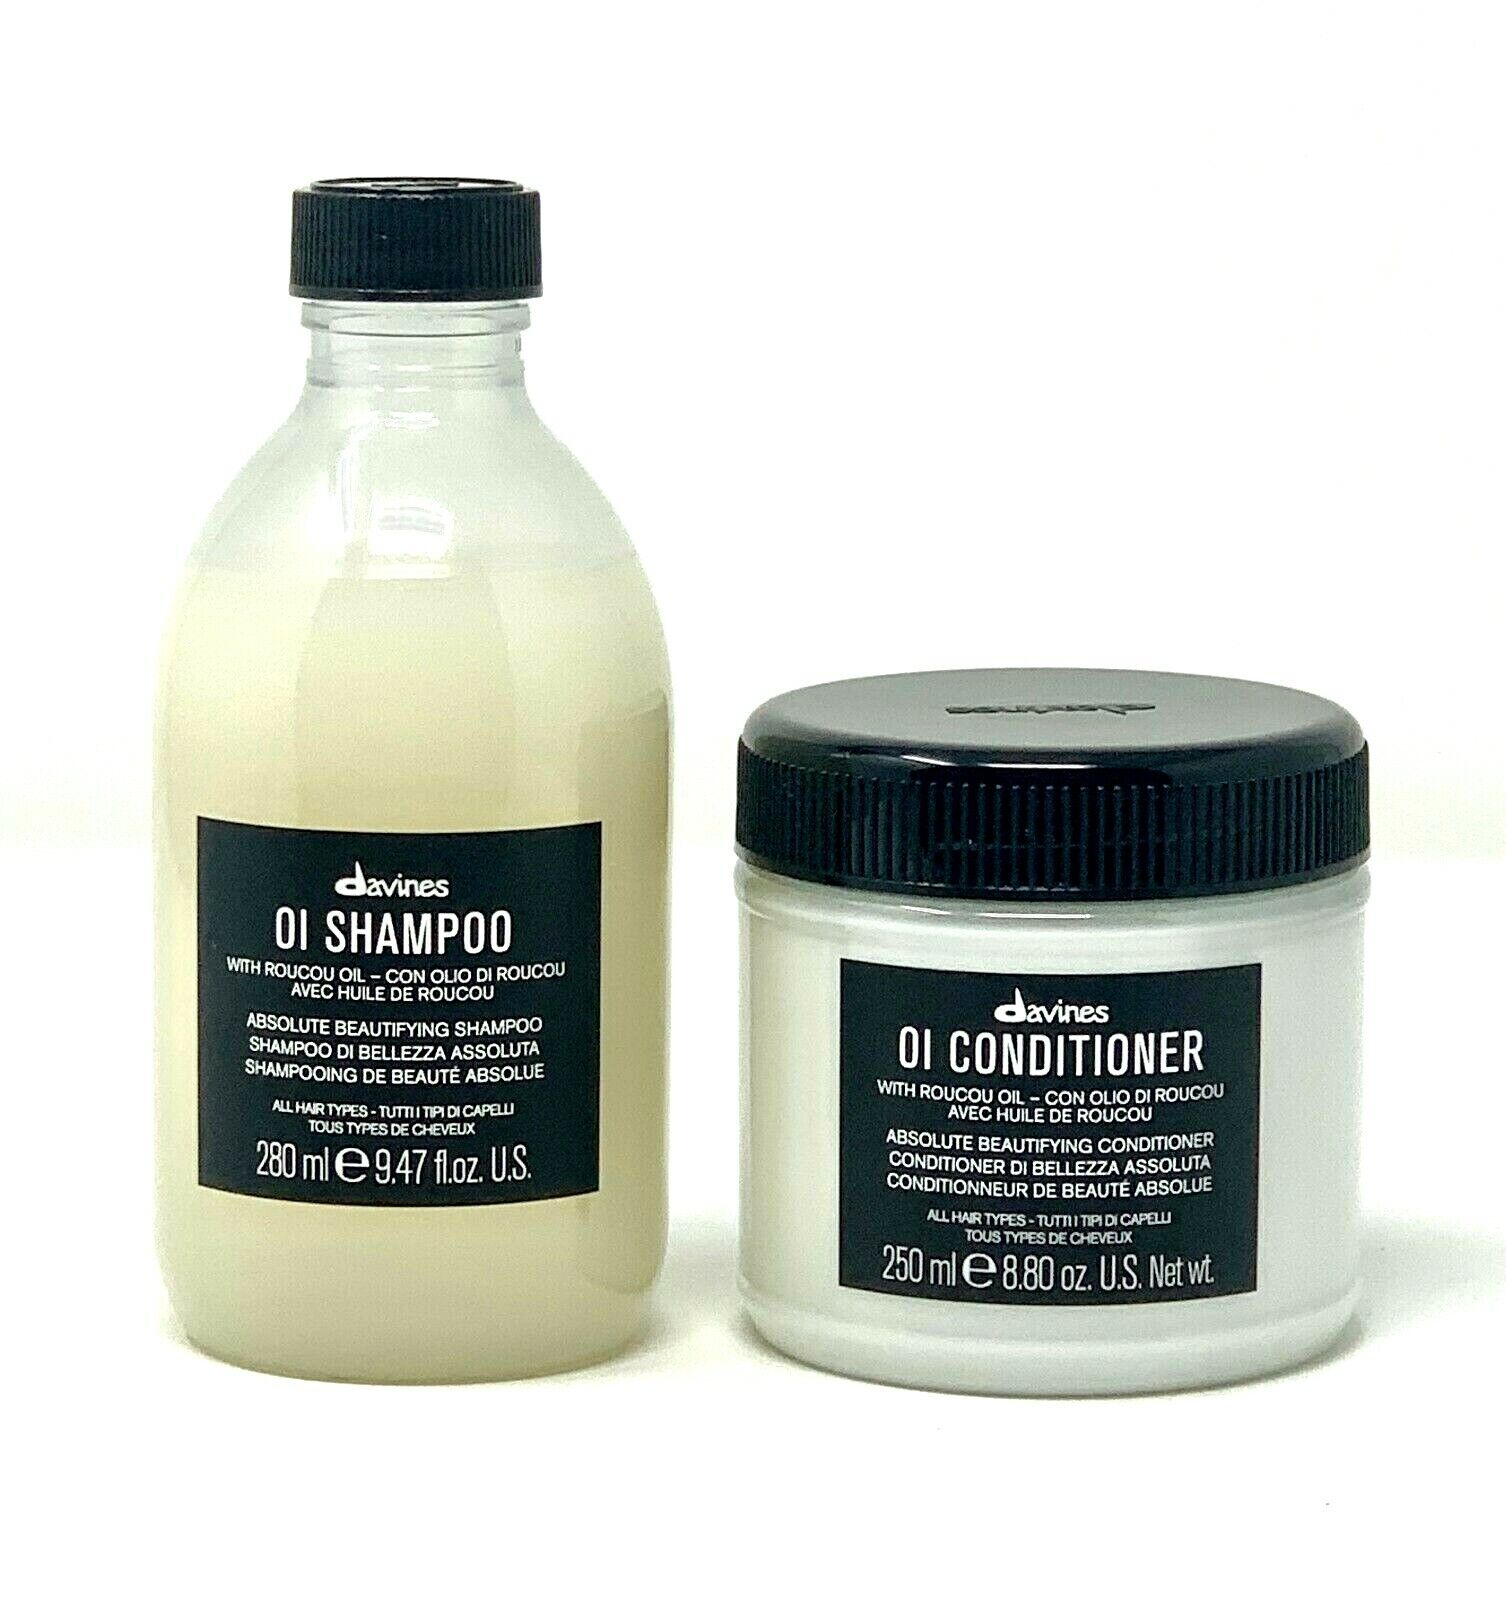 Davines Shampoo oz &amp; OI Conditioner 8.8 oz Combo eBay